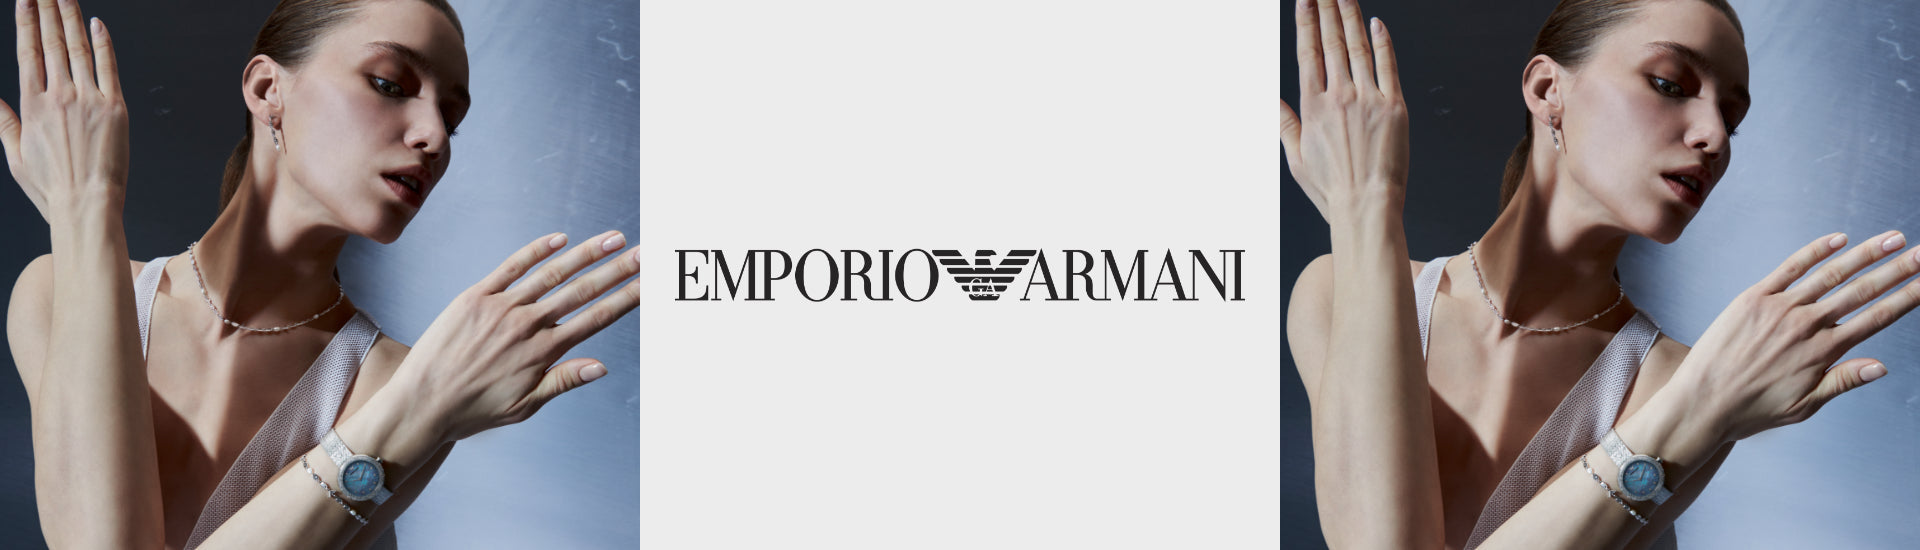 EMPORIO ARMANI Arabia – | ONTIME Official Store Saudi